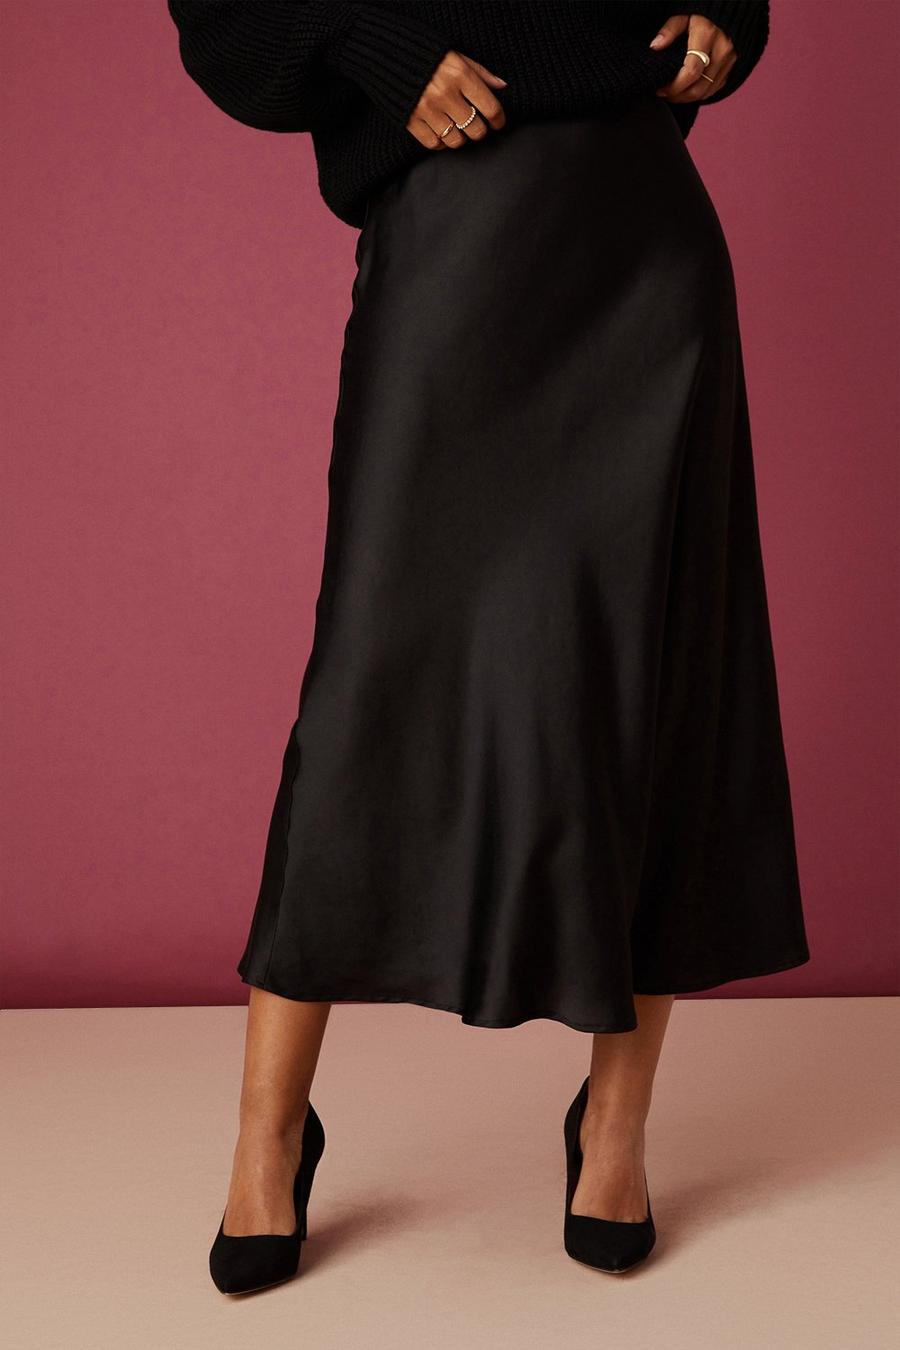 Petite Black Satin Bias Midi Skirt